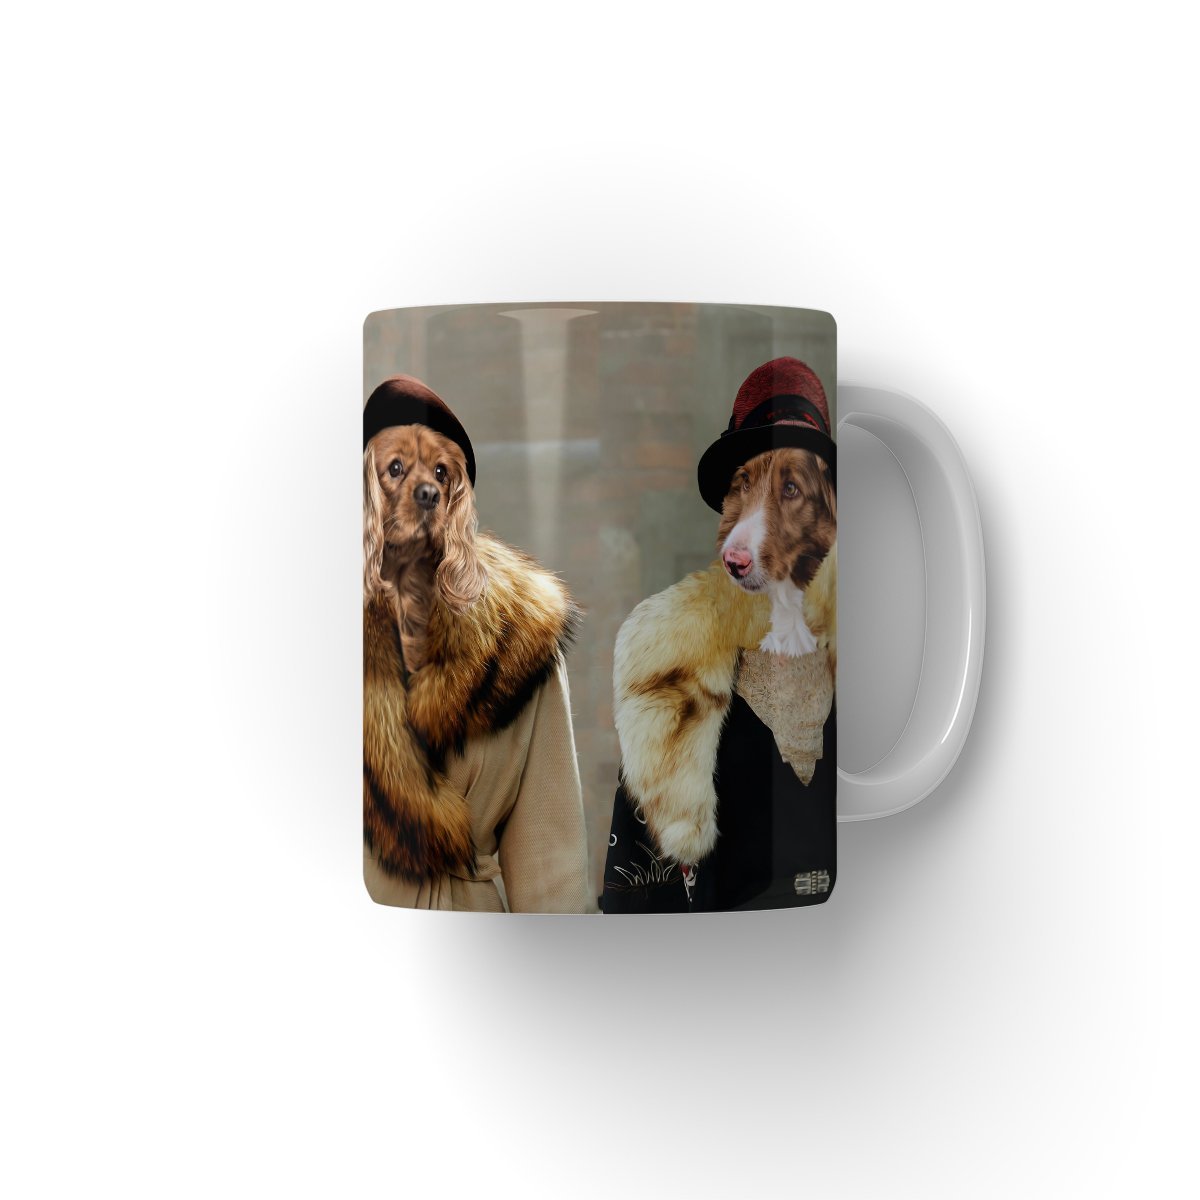 Peaky Blinders Women: Custom Pet Mug - Paw & Glory - #pet portraits# - #dog portraits# - #pet portraits uk#paw and glory, custom pet portrait Mug,mug with dogs face on it, dog picture mug, dog coffee mugs personalized, put your pet on a mug, personalized pet coffee mugs